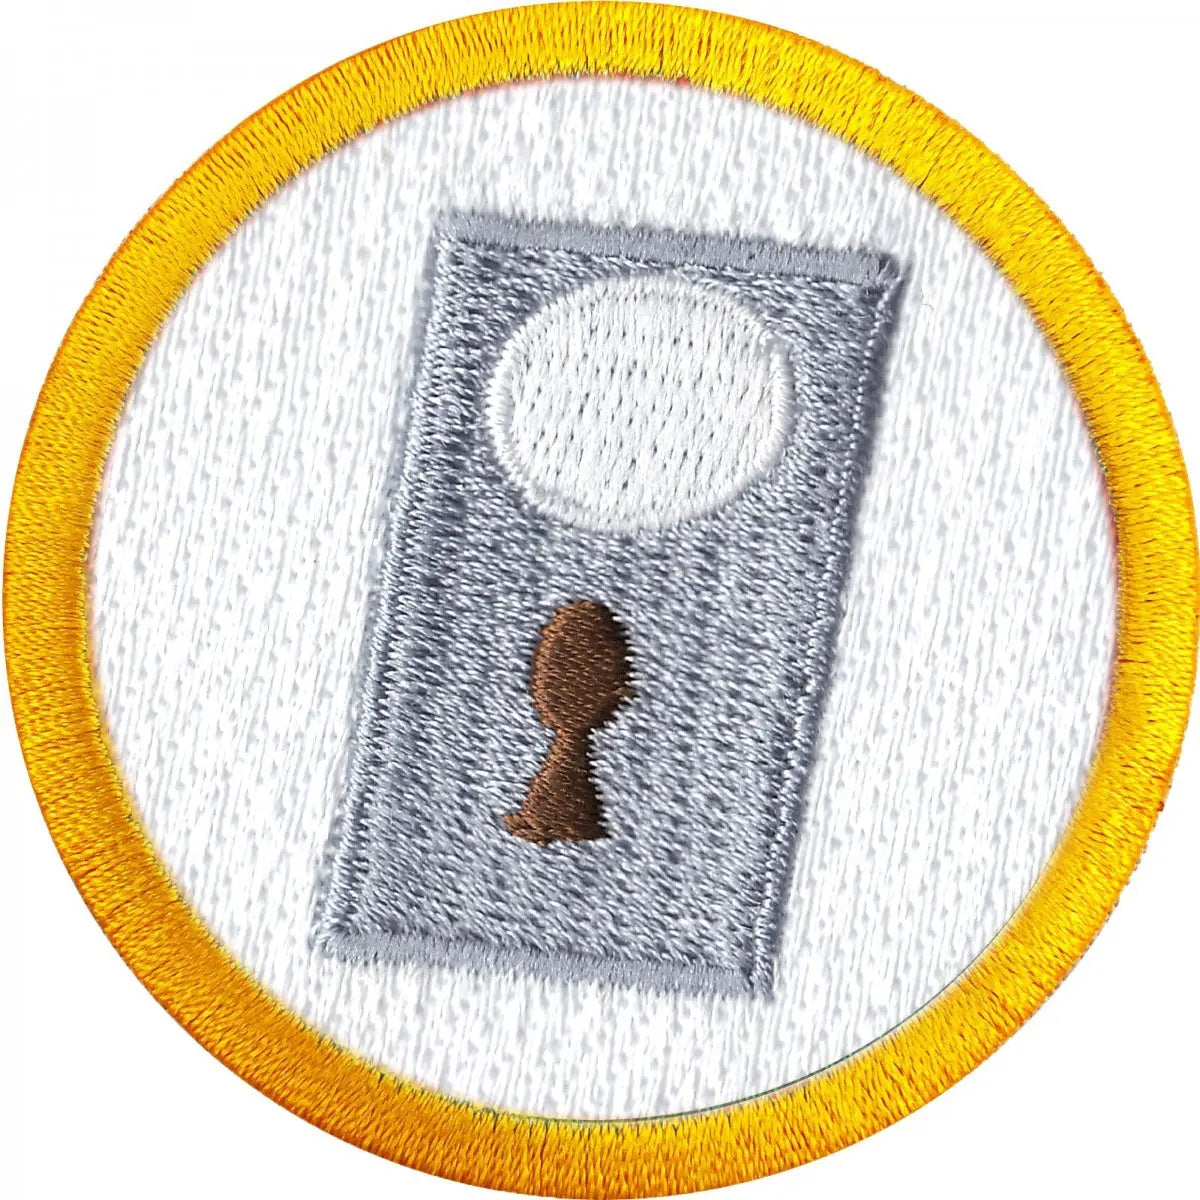 Locksmiths Wilderness Scout Merit Badge Iron on Patch 